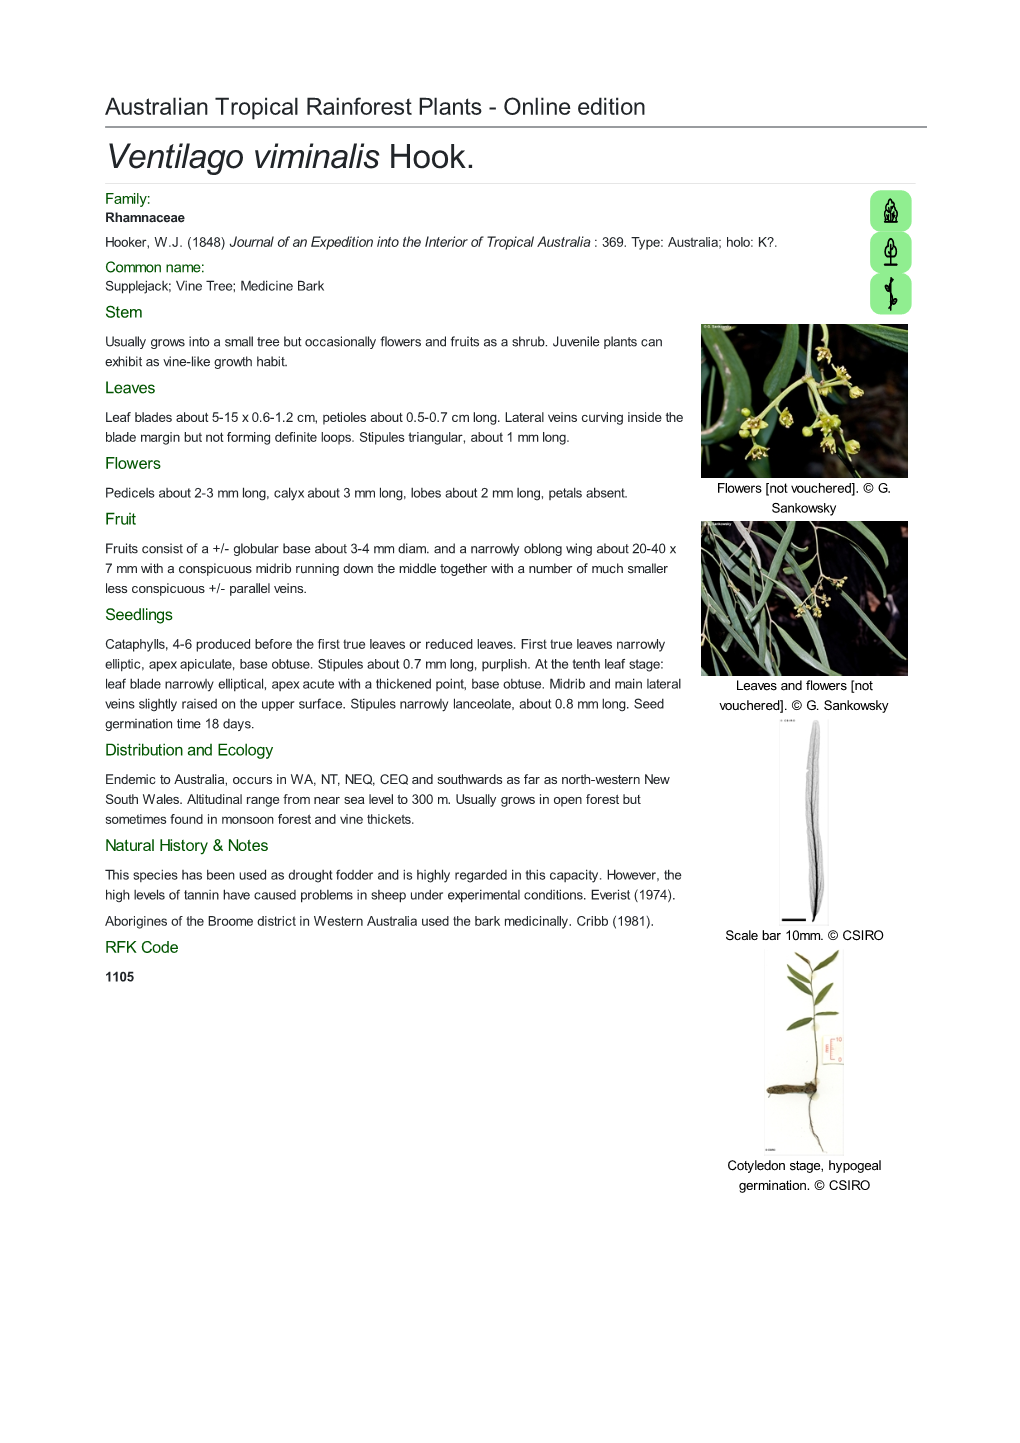 Ventilago Viminalis Hook. Family: Rhamnaceae Hooker, W.J